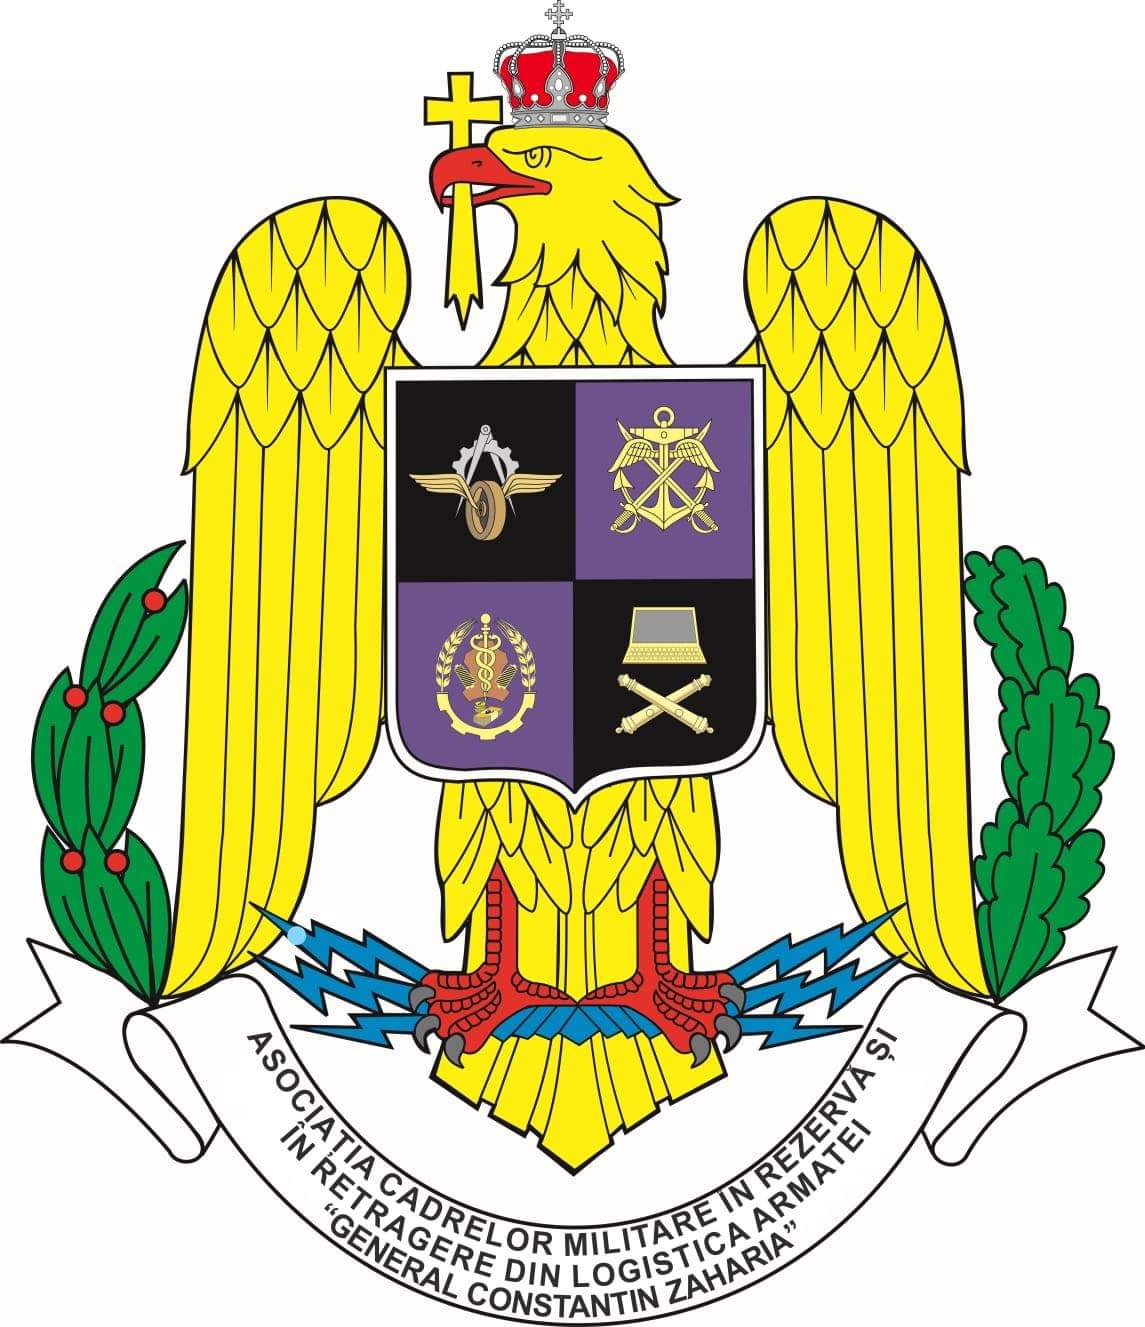 Filiala Judeteana Sibiu a Asociatiei Cadrelor Militare in Rezerva si Retragerea din Logistica Armatei ,,General Constantin Zaharia" logo